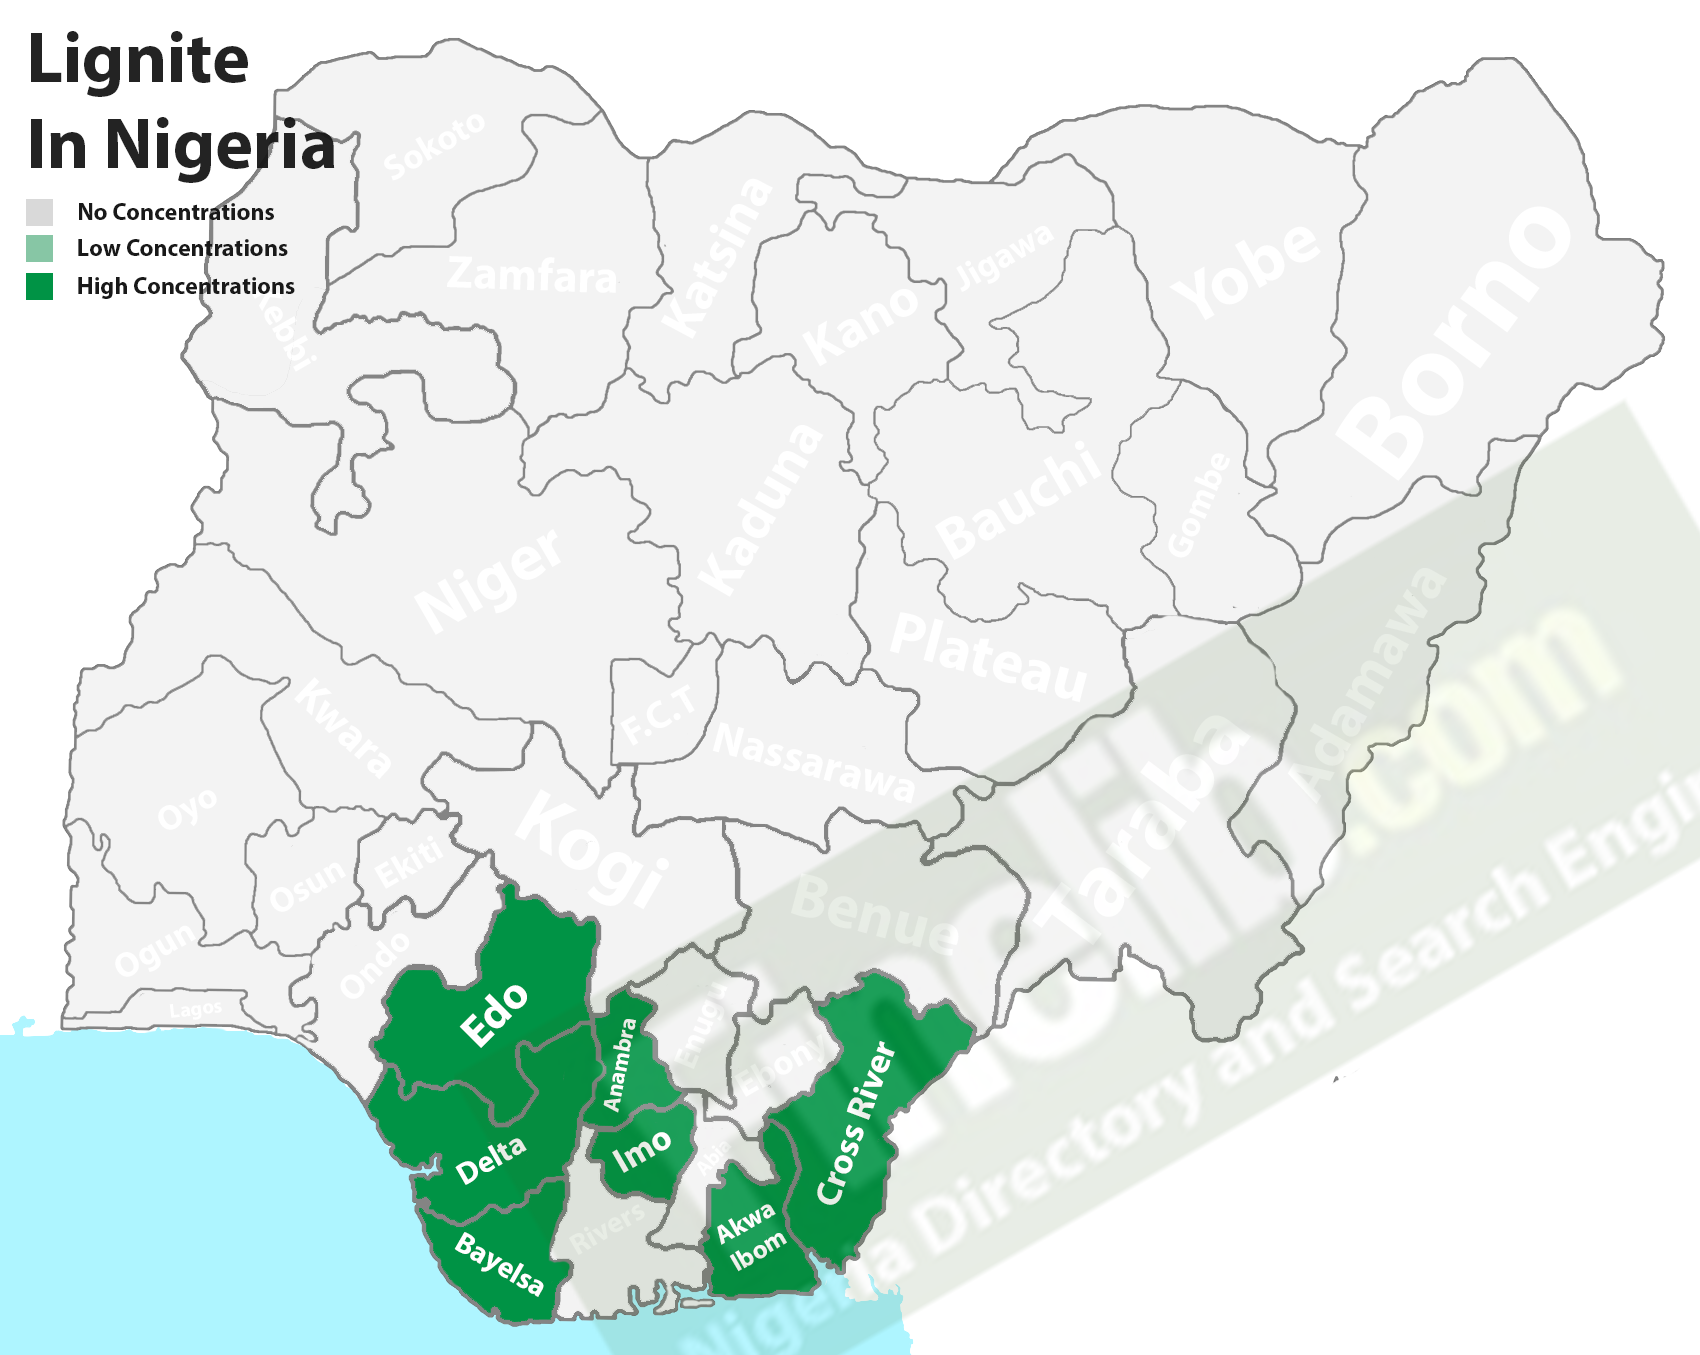 Lignite mineral deposits in Nigeria